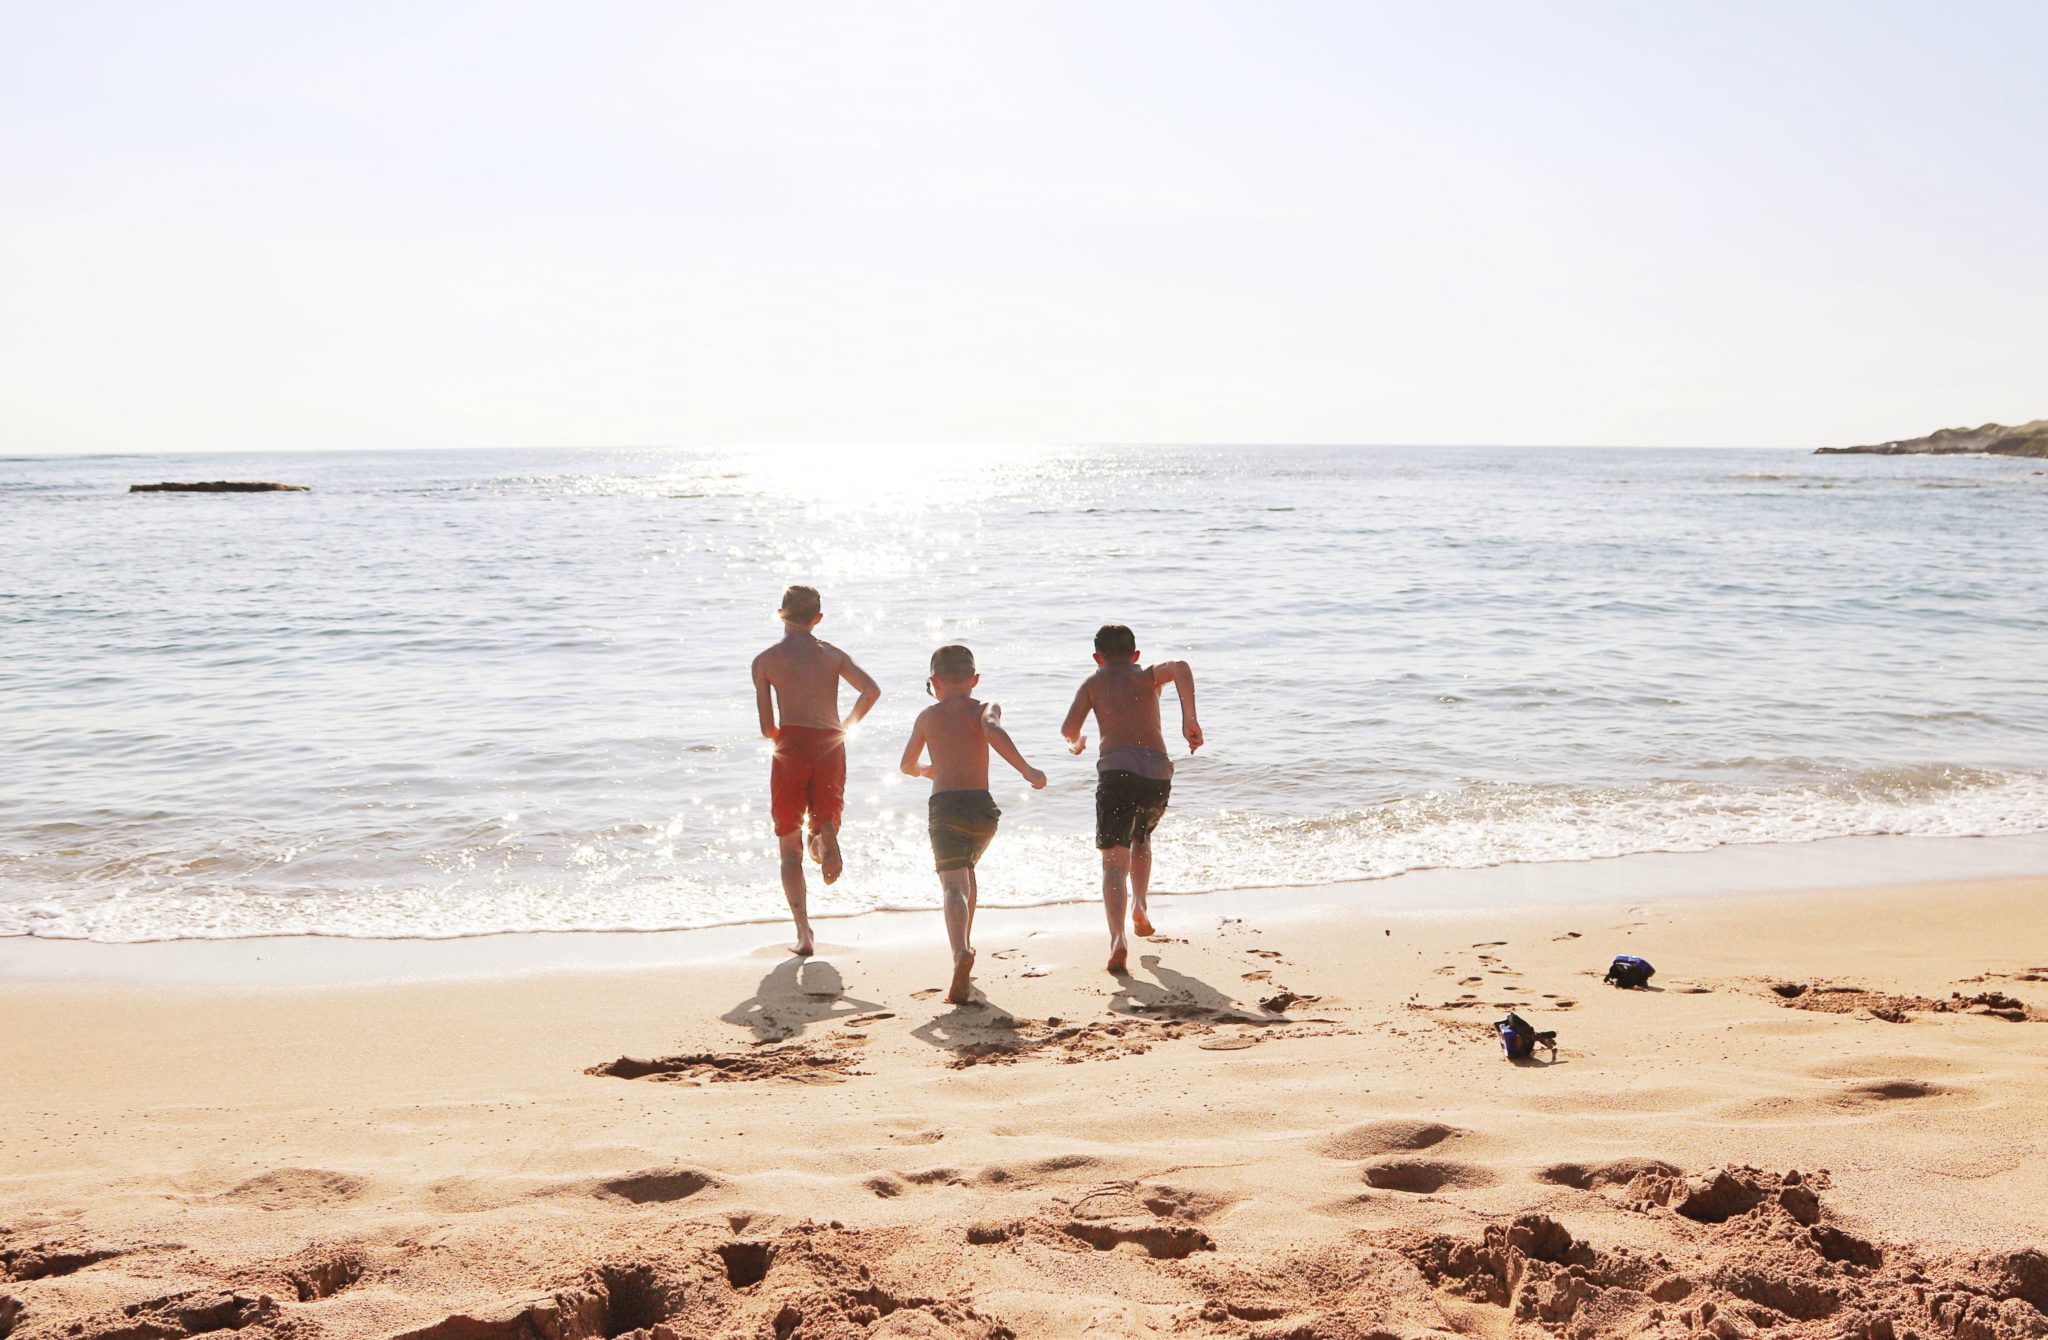 Salt Pond Beach is one of the best beaches for kids in Kauai- Top things to do in Kauai #kauai #hawaii #saltpondbeach